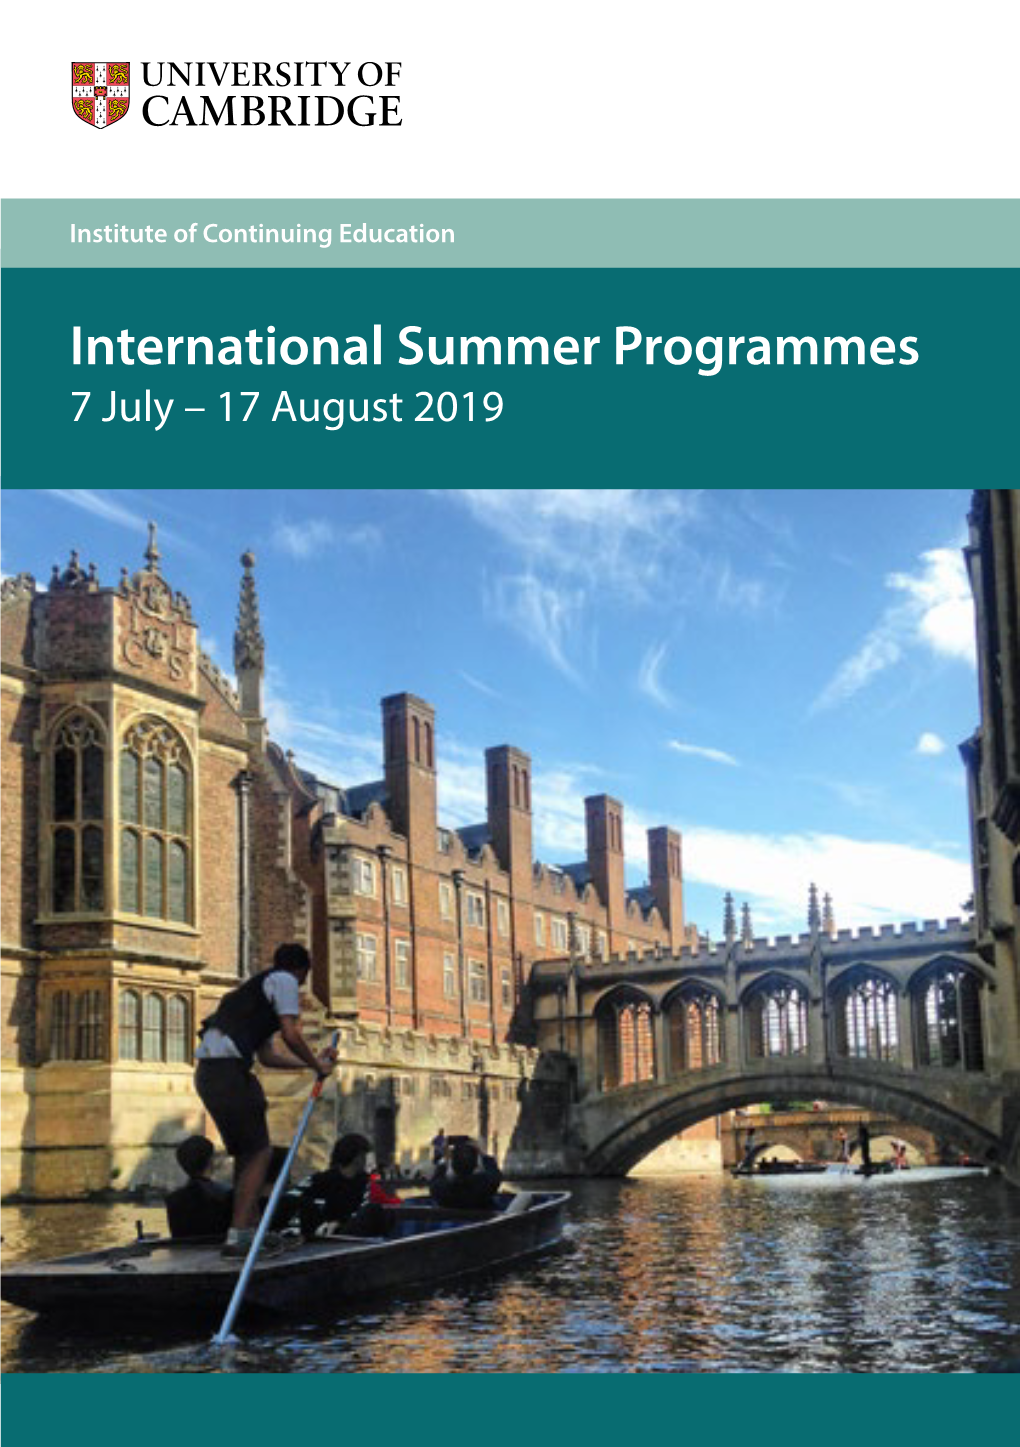 University of Cambridge International Summer Programmes